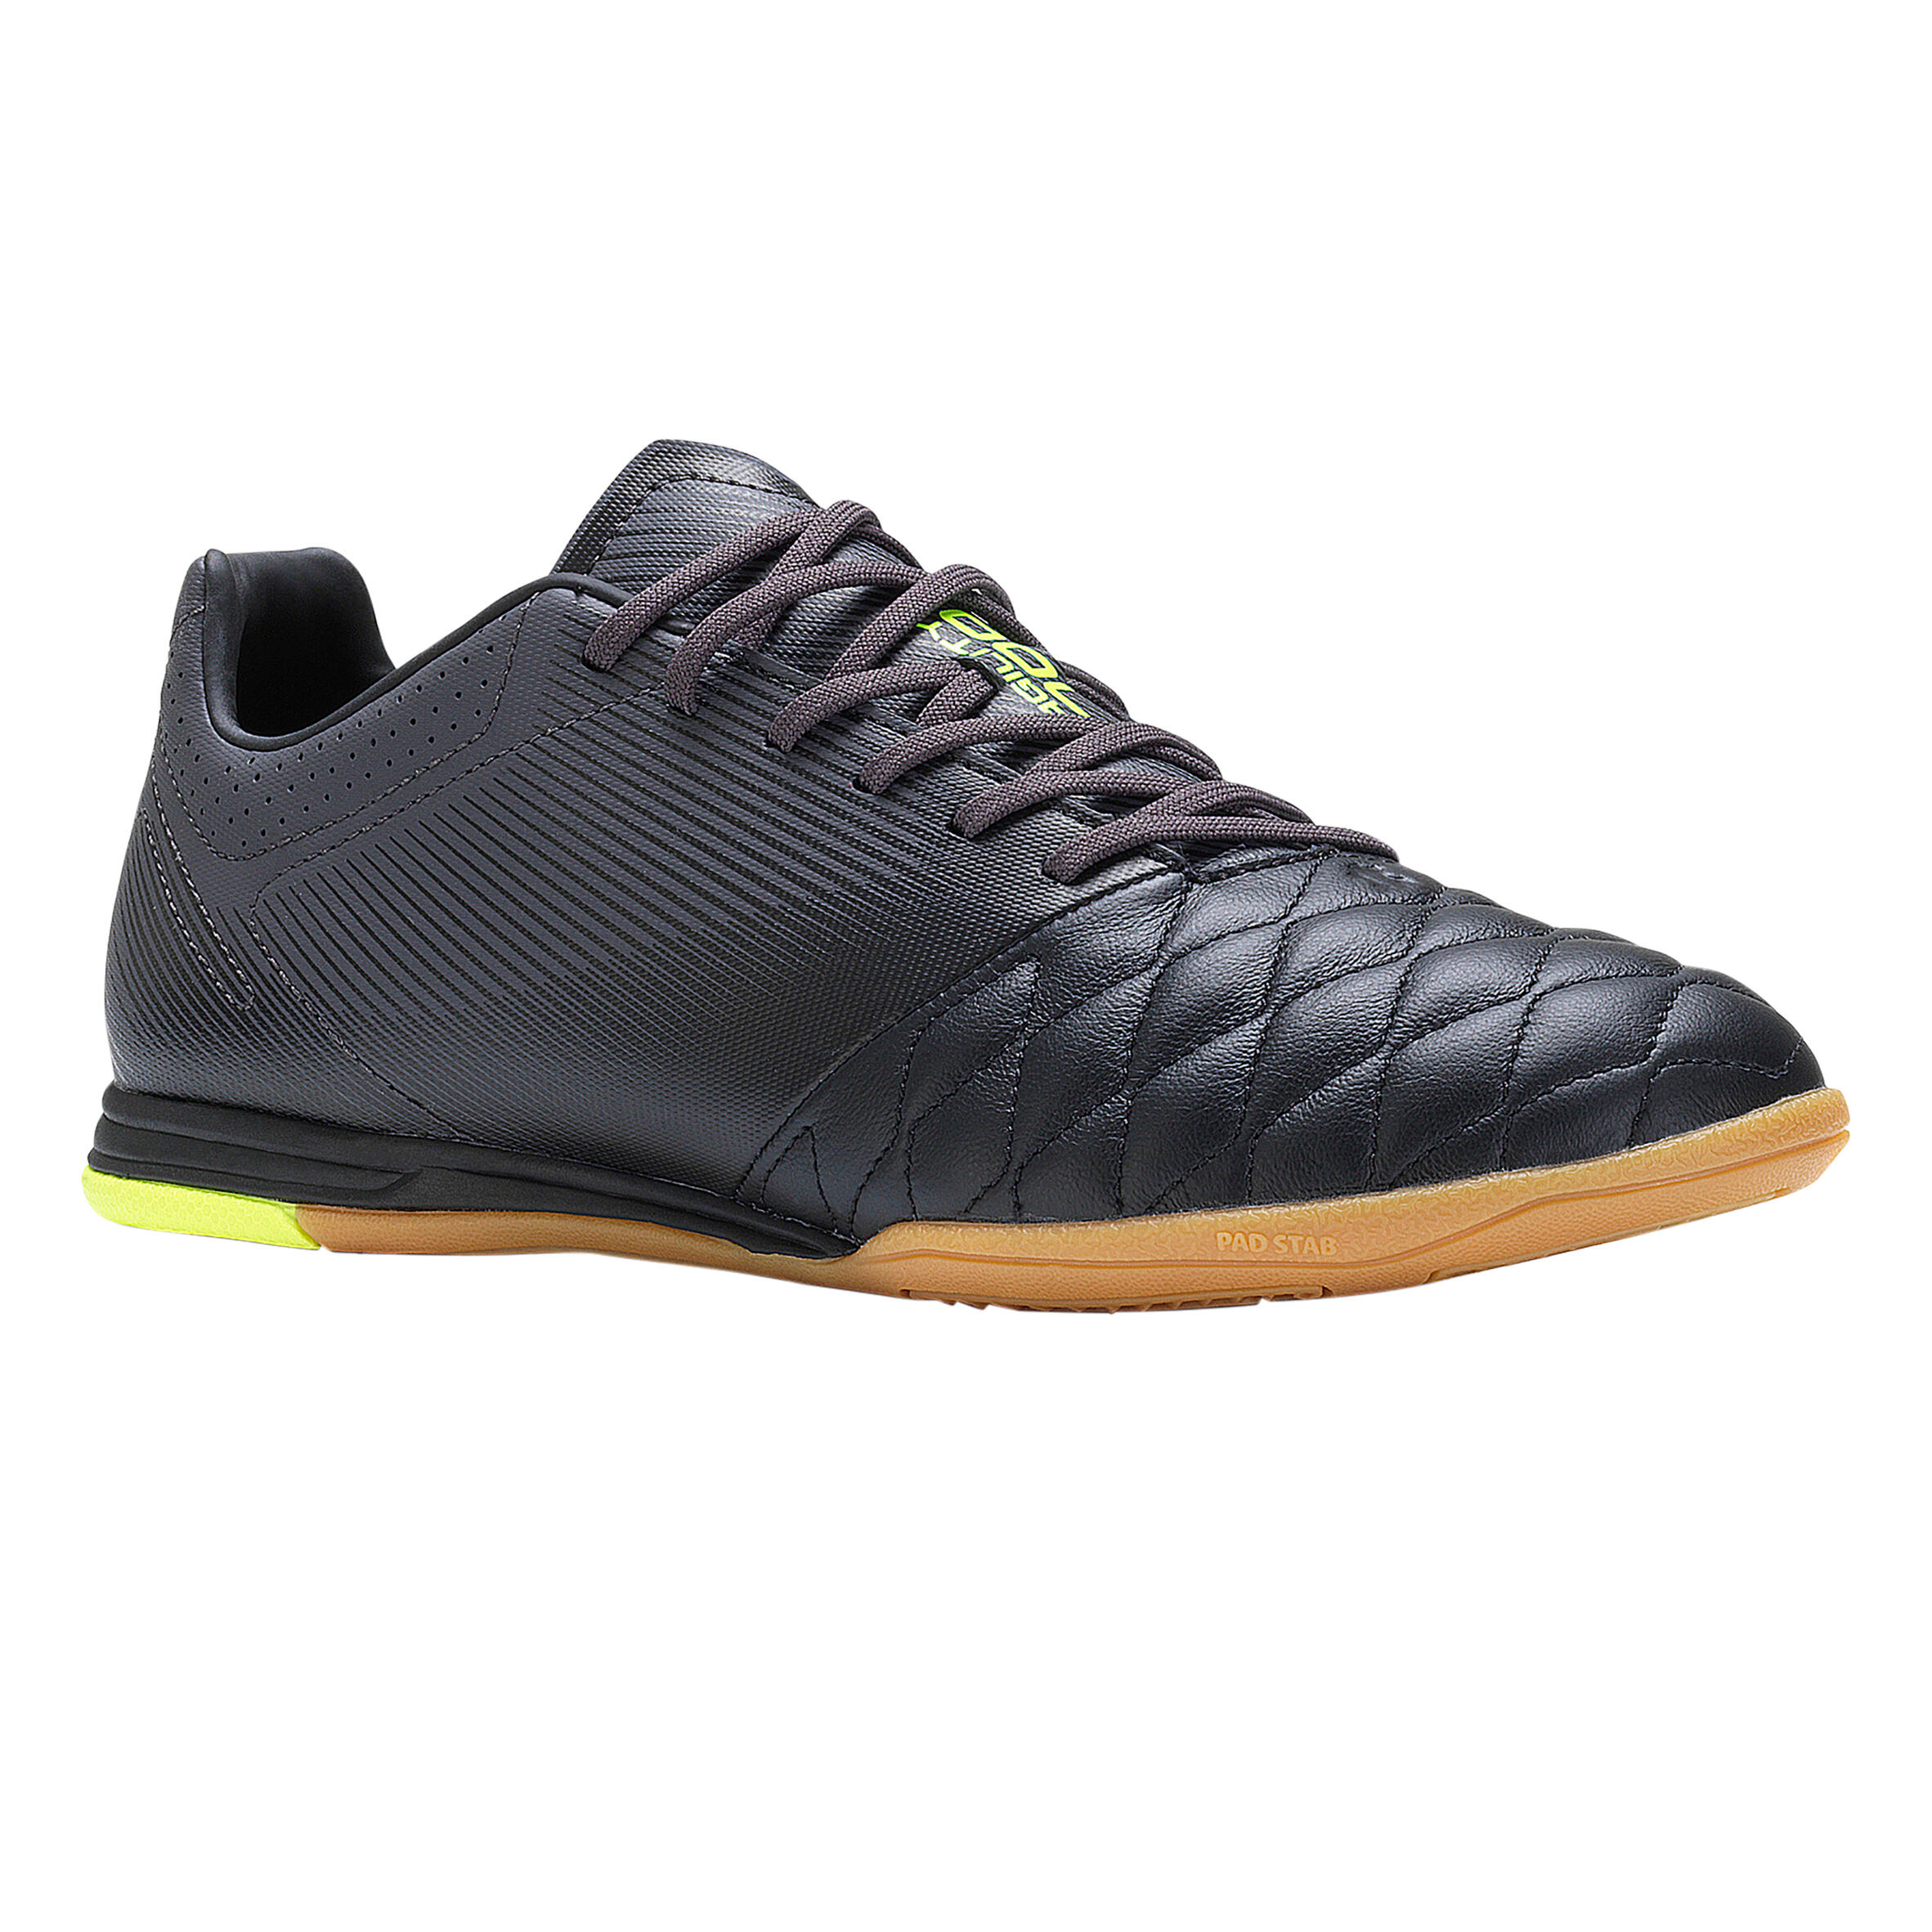 Agility 700 Futsal Boots - Black 